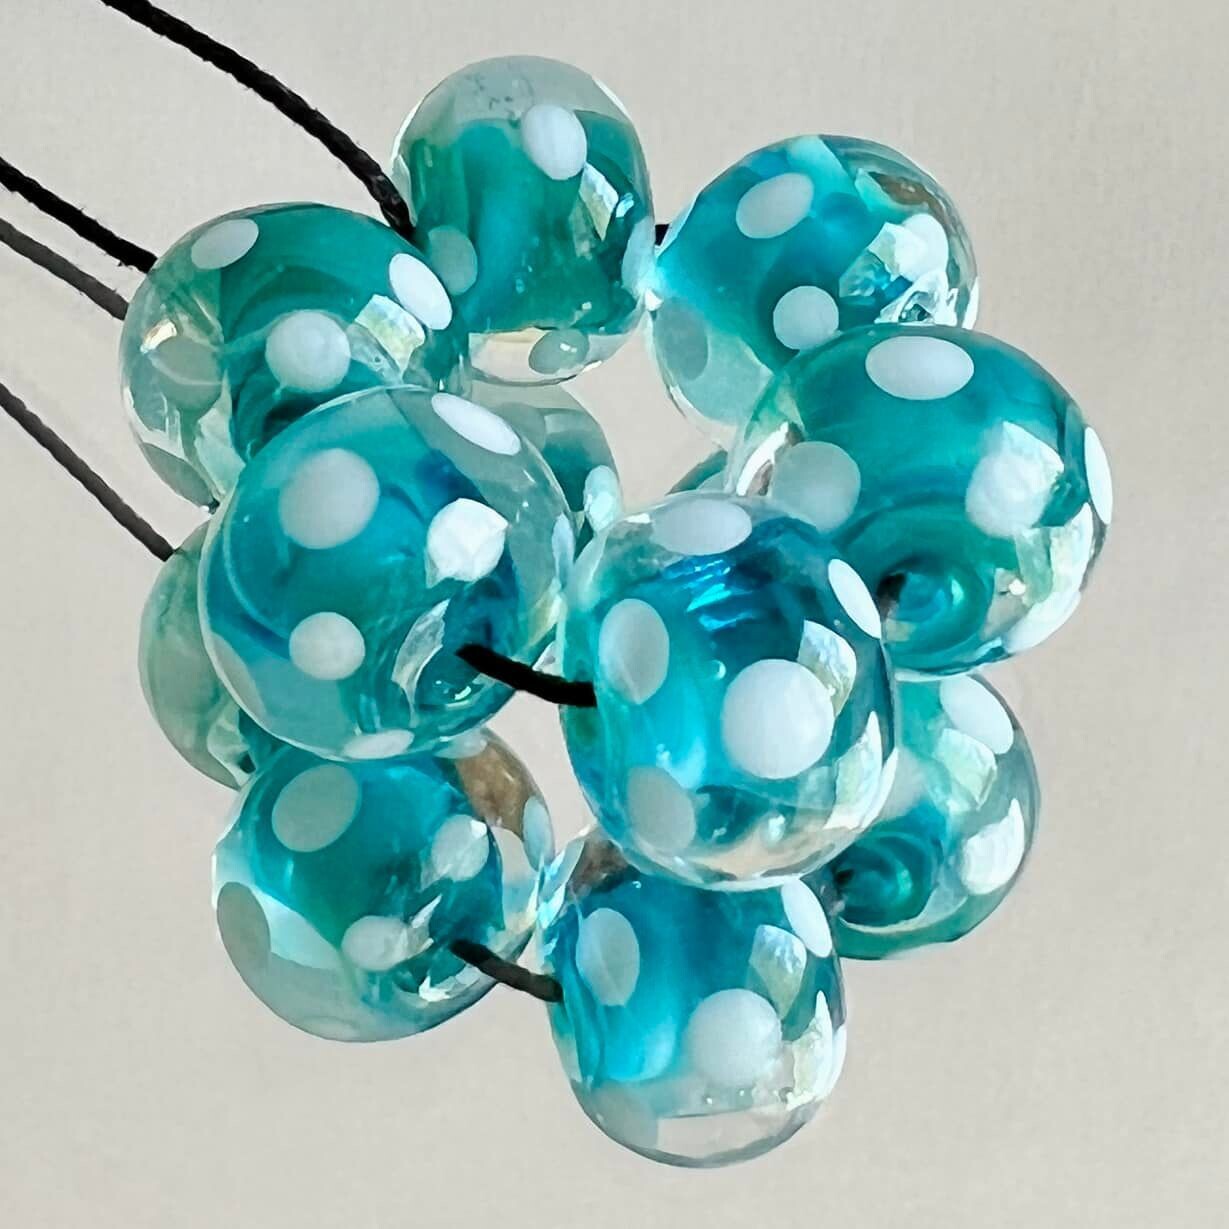 Indian Ocean White Dots Handmade Lampwork Beads